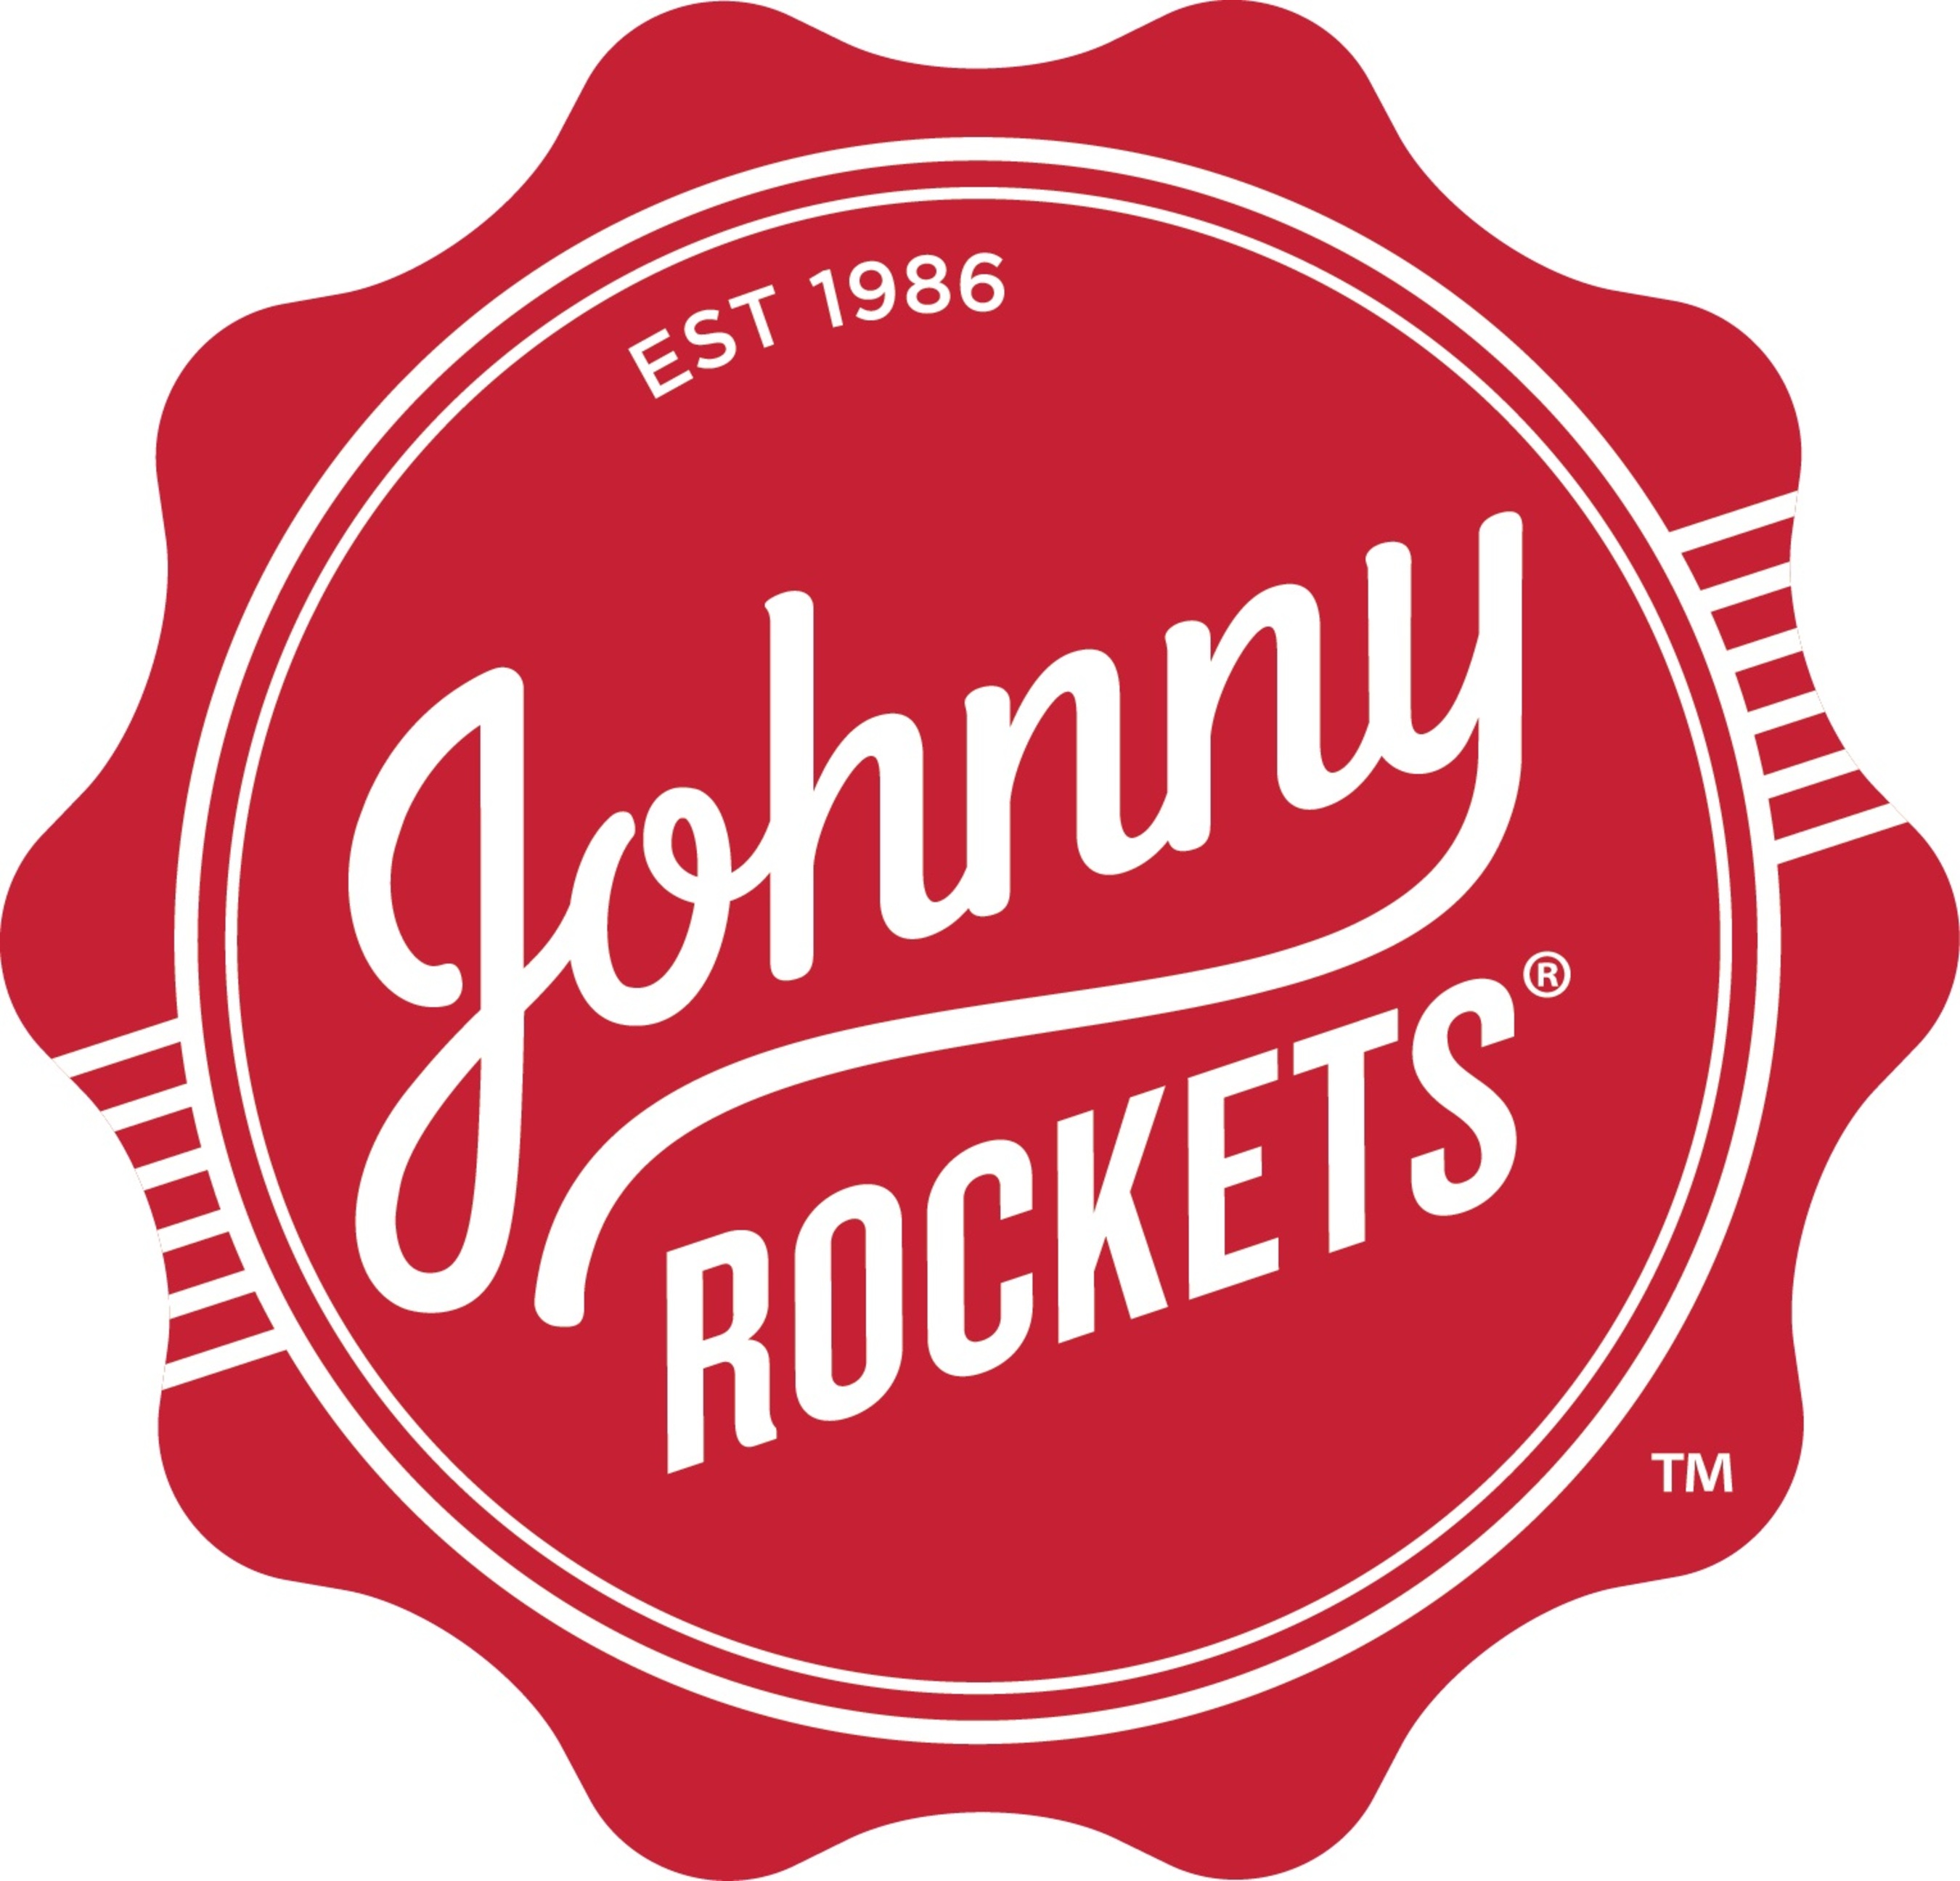 Johnny Rockets logo.